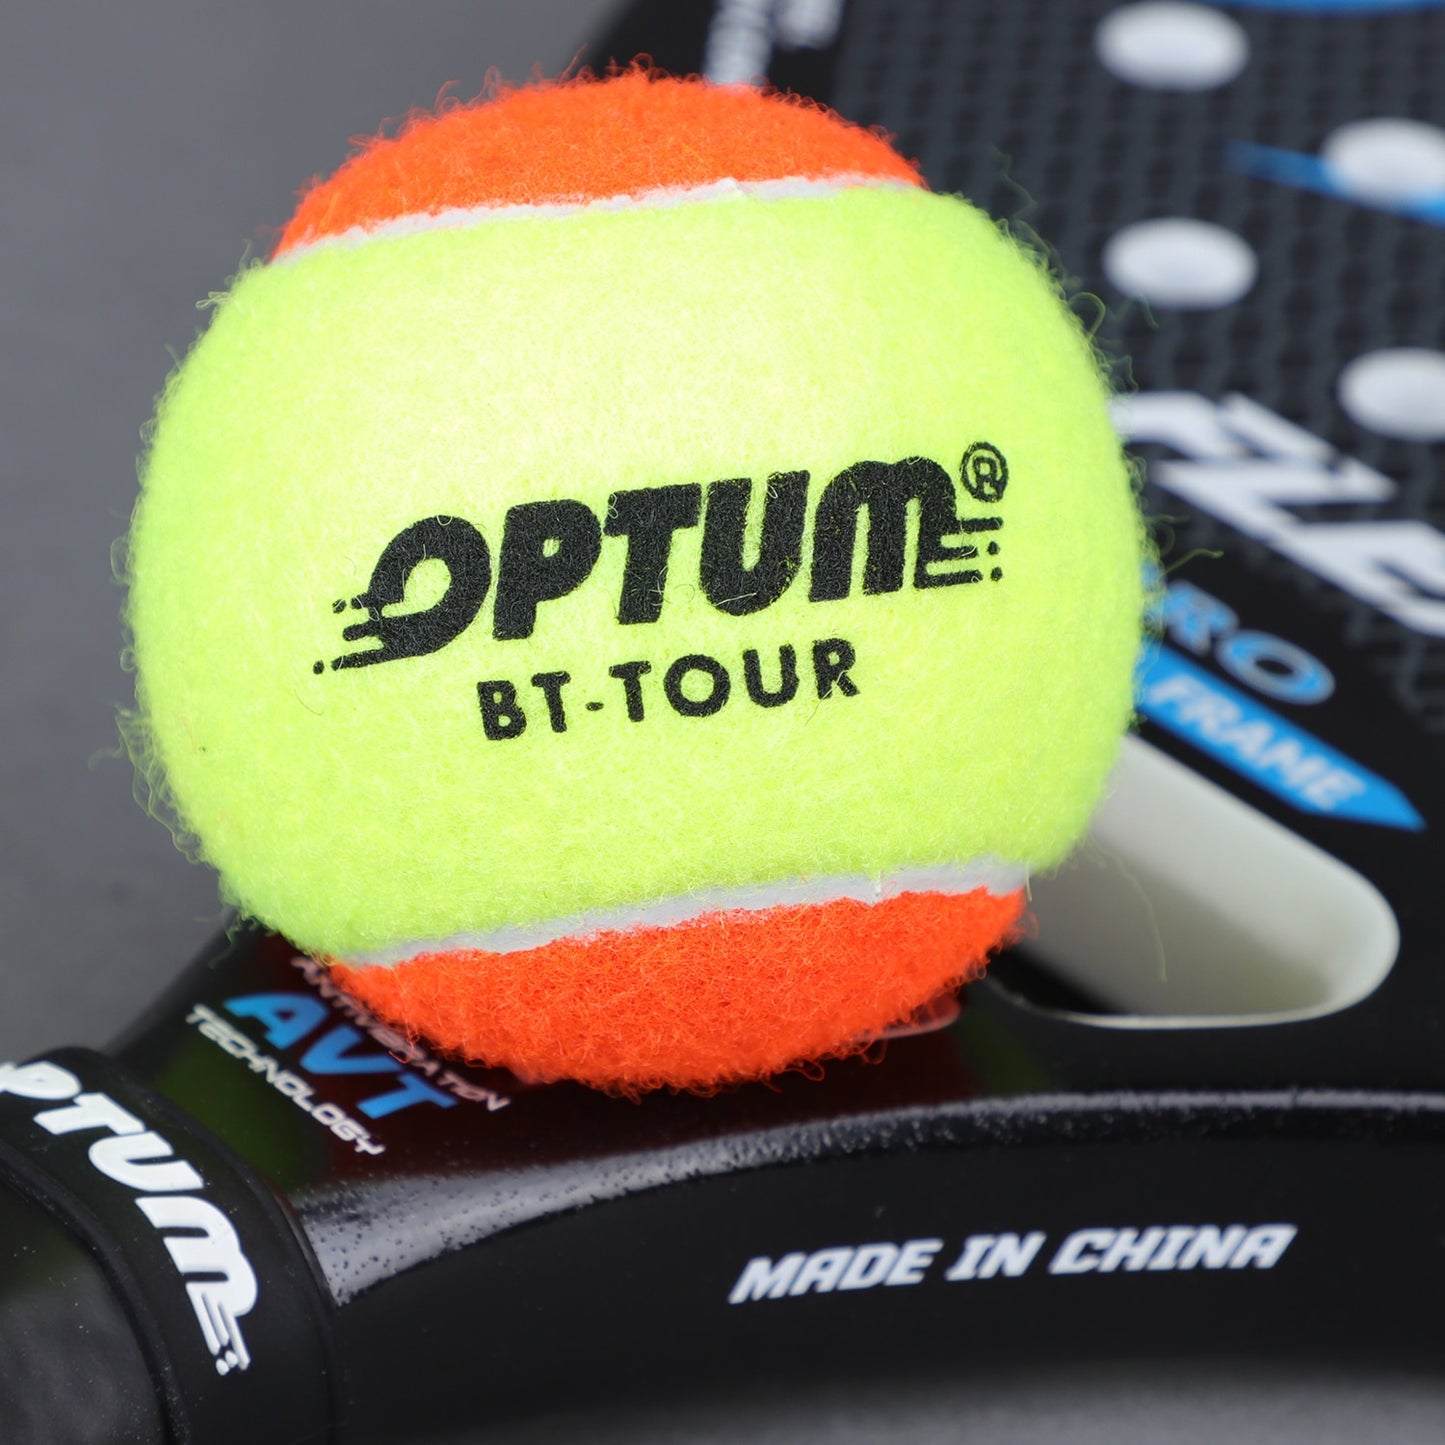 OPTUM BT-TOUR Beach Tennis Balls 50% Pressure With Mesh Shoulder Bag - 12, 24, 36 Pack Sizes